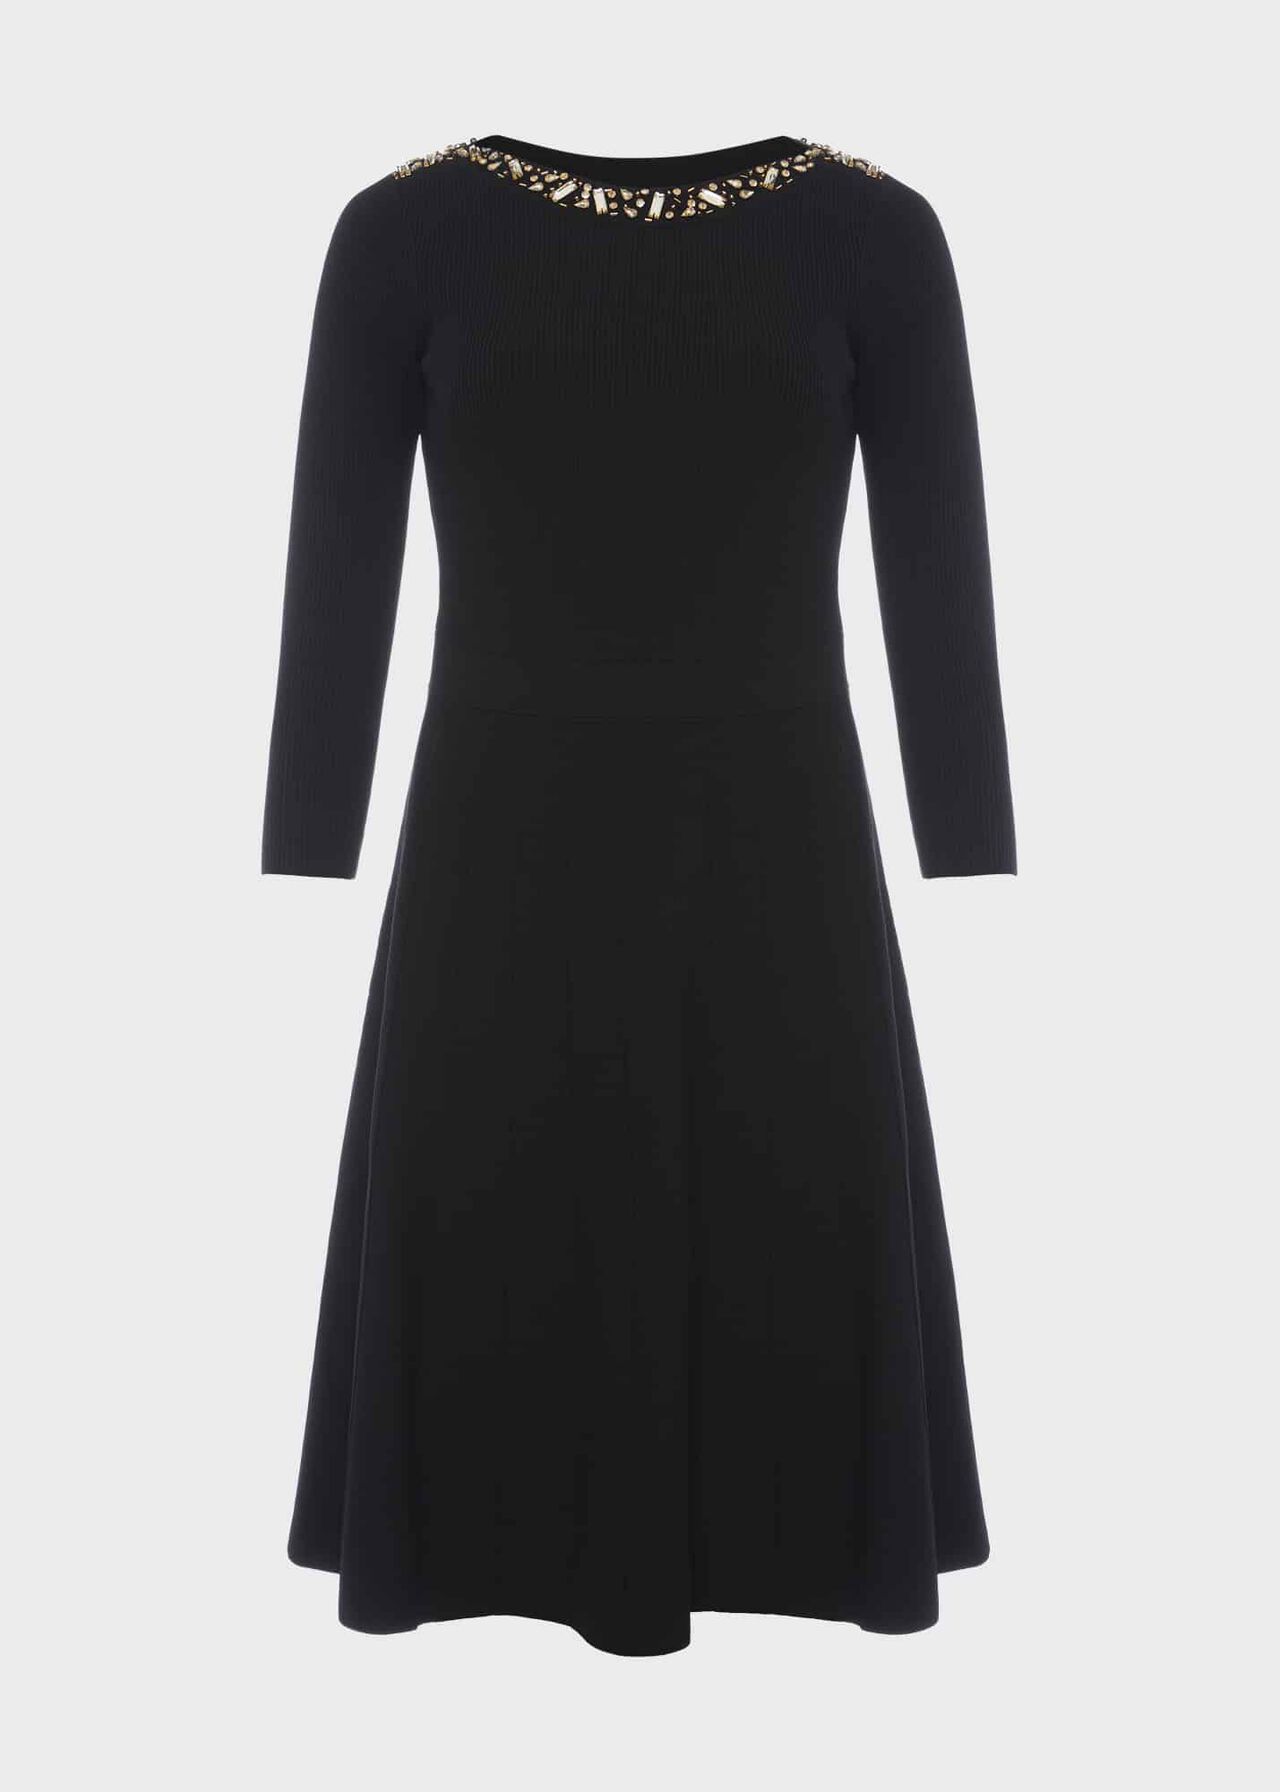 Emily Knitted Sequin Dress, Black, hi-res